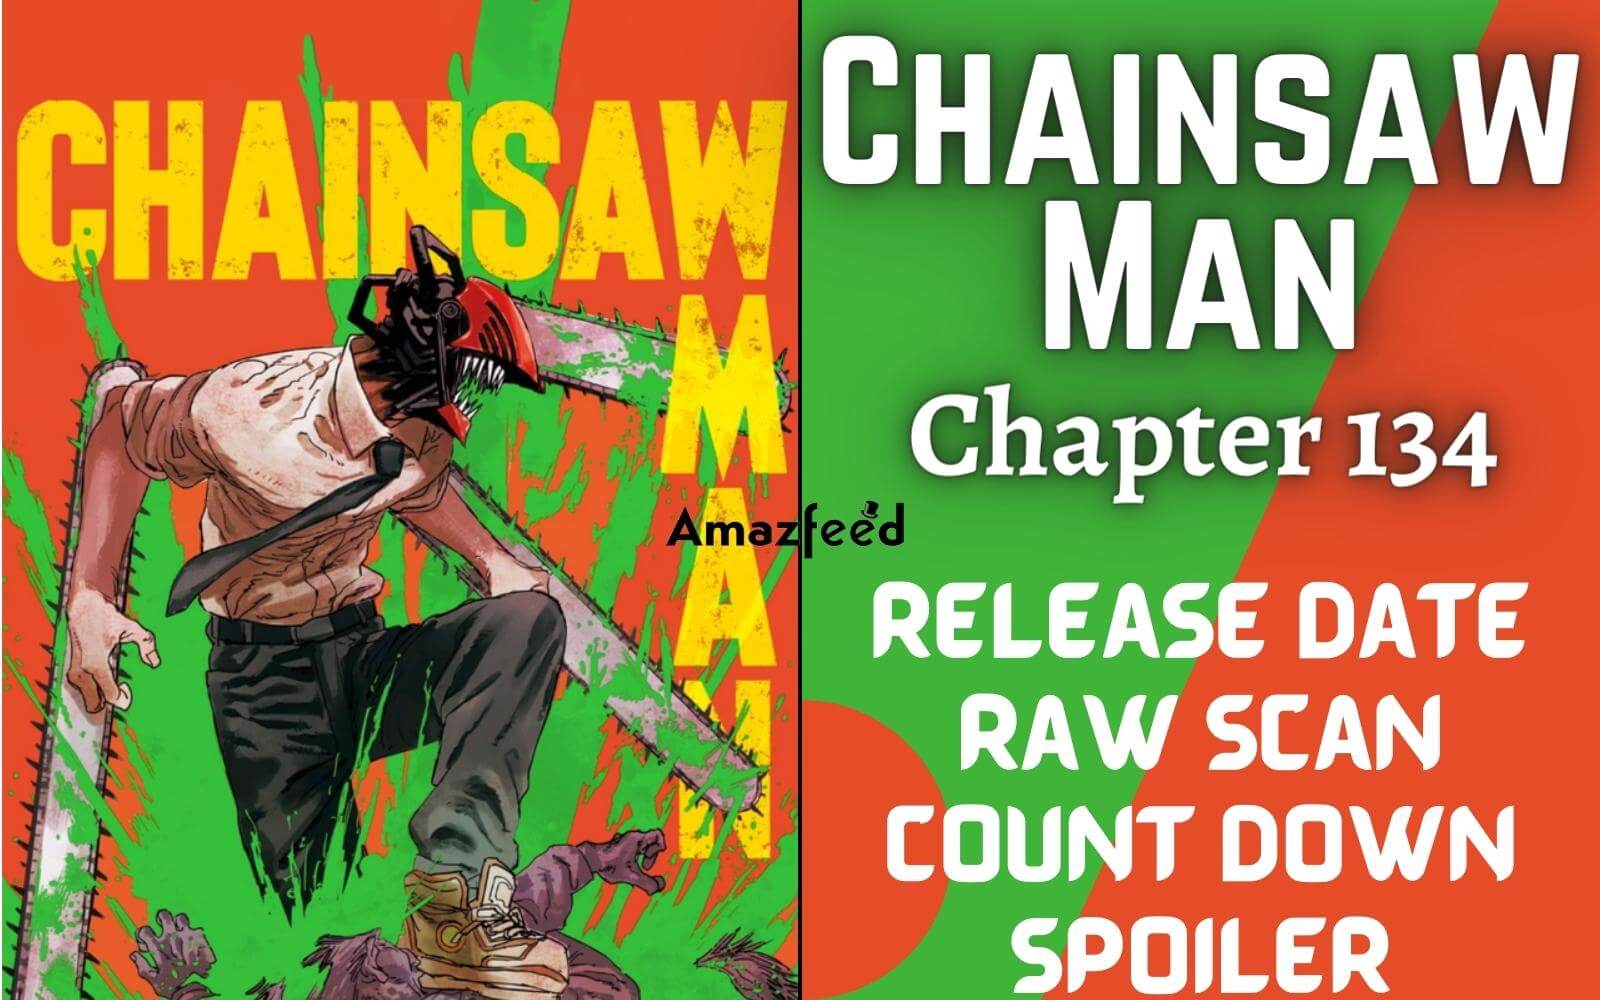 Oshi No Ko Chapter 134: Final Spoilers; release date, where to